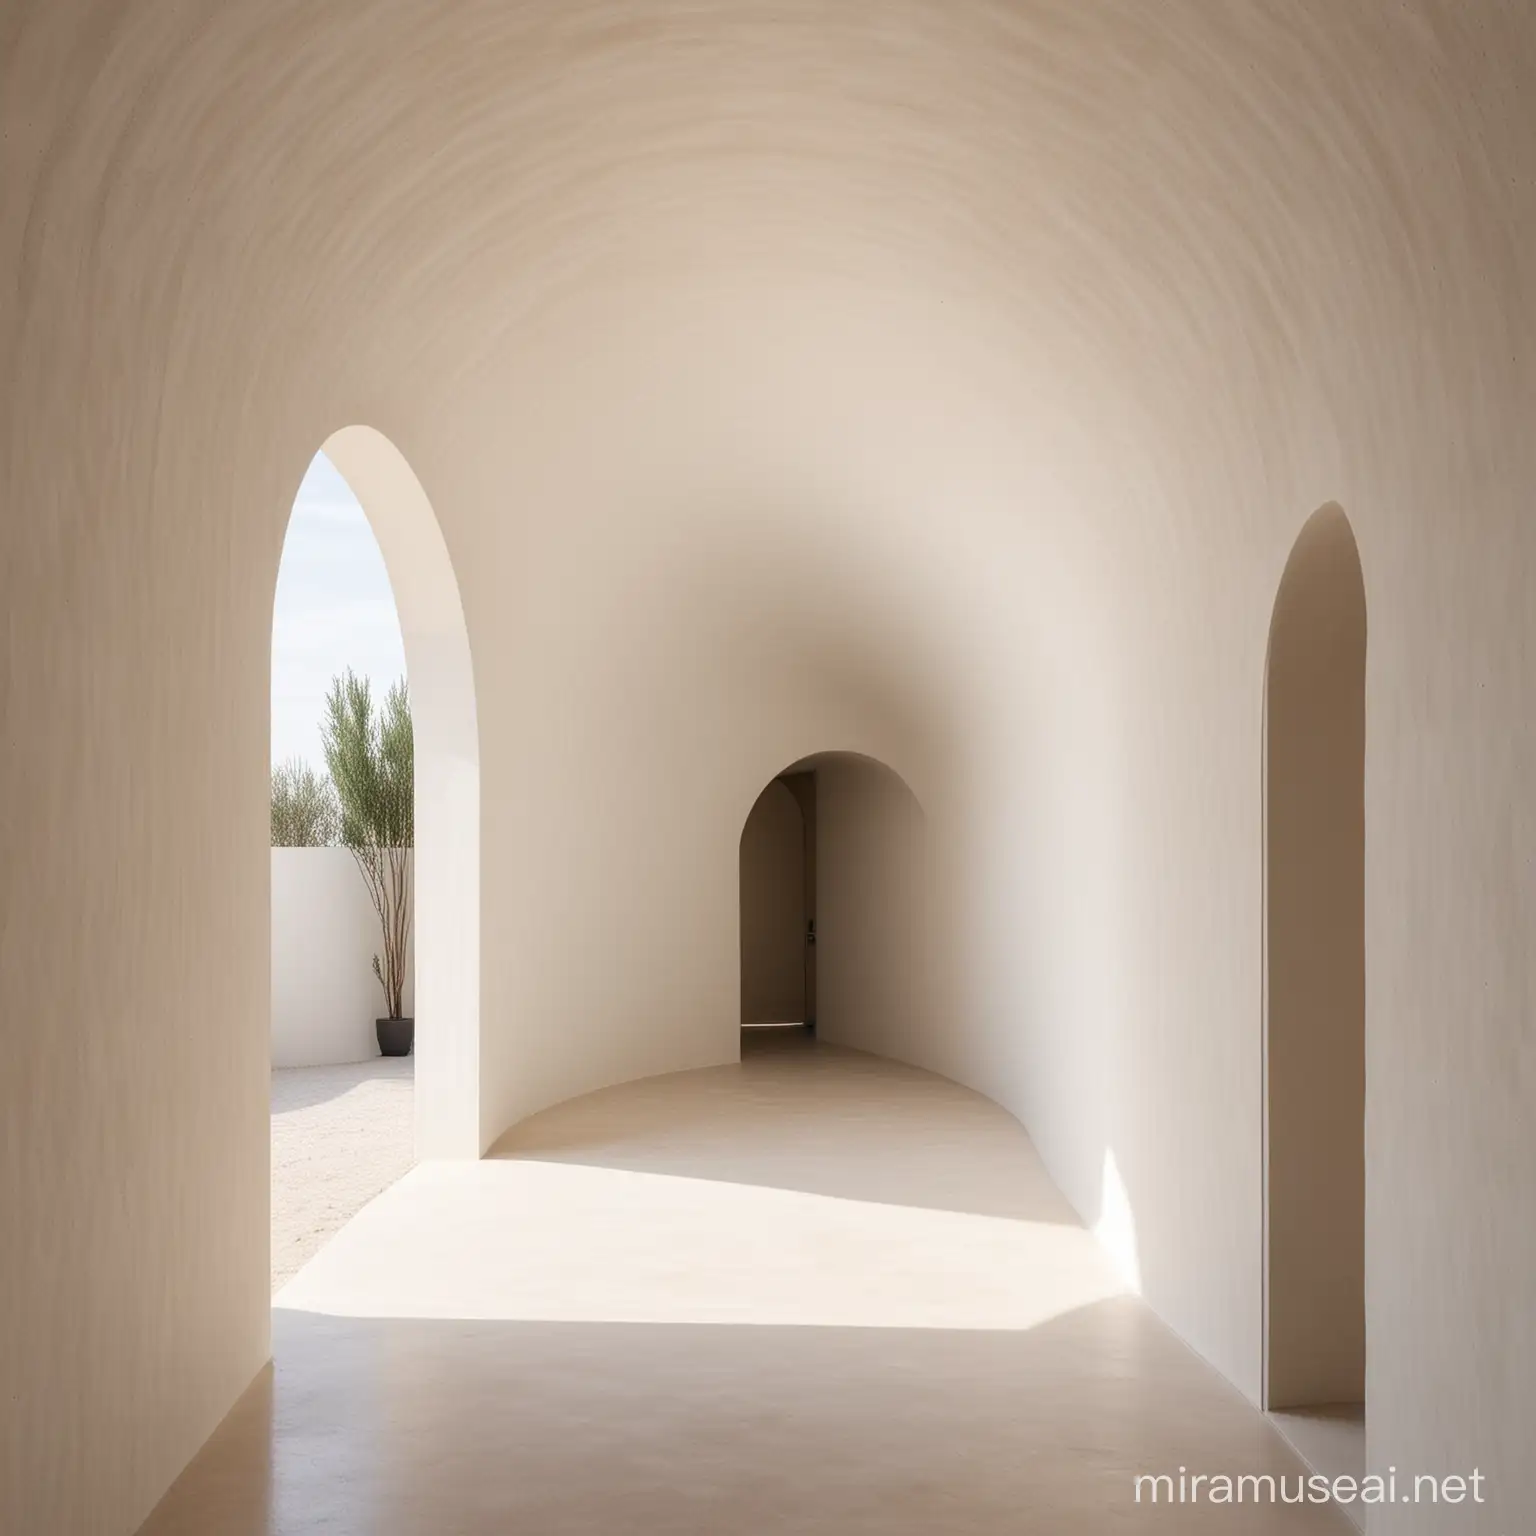 Minimalist Circular Corridor with White Sand Floor